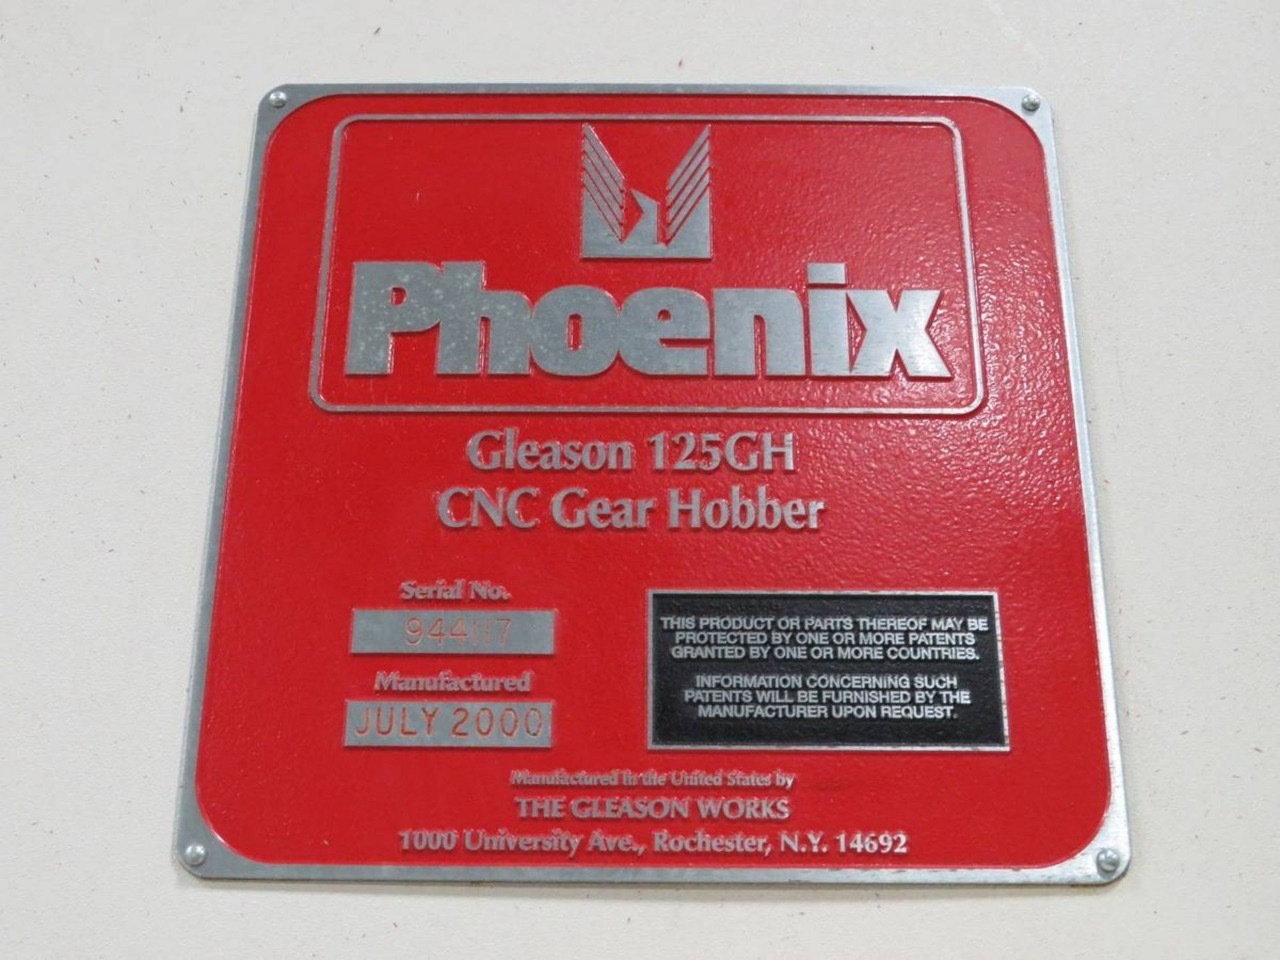 Gleason Phoenix 125GH CNC Gear Hobber